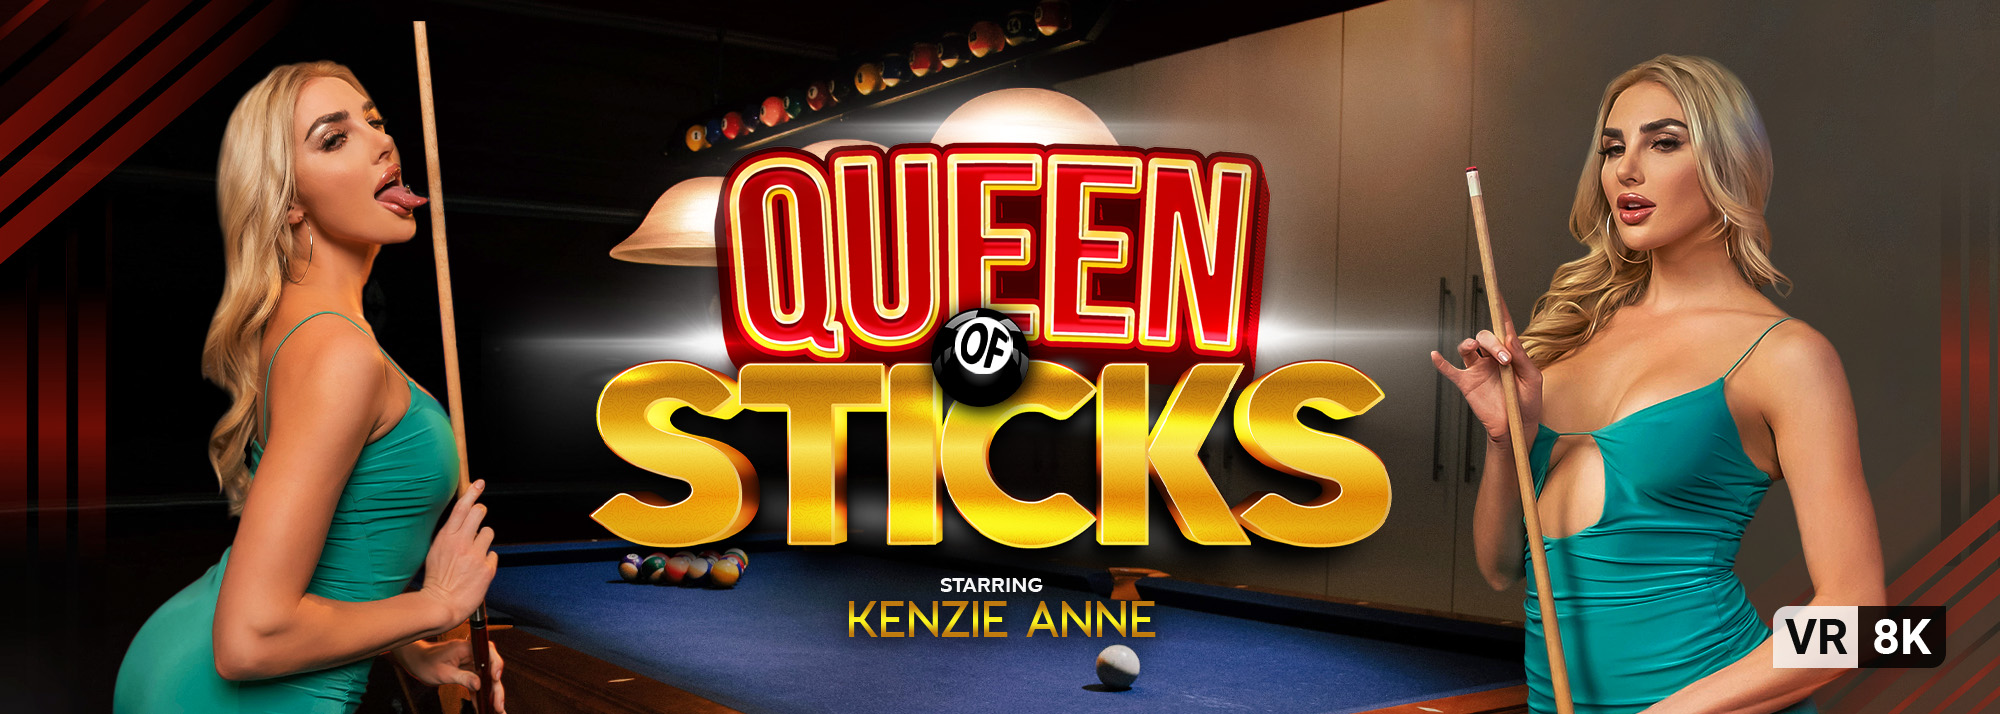 Queen of Sticks with Kenzie Anne  Slideshow